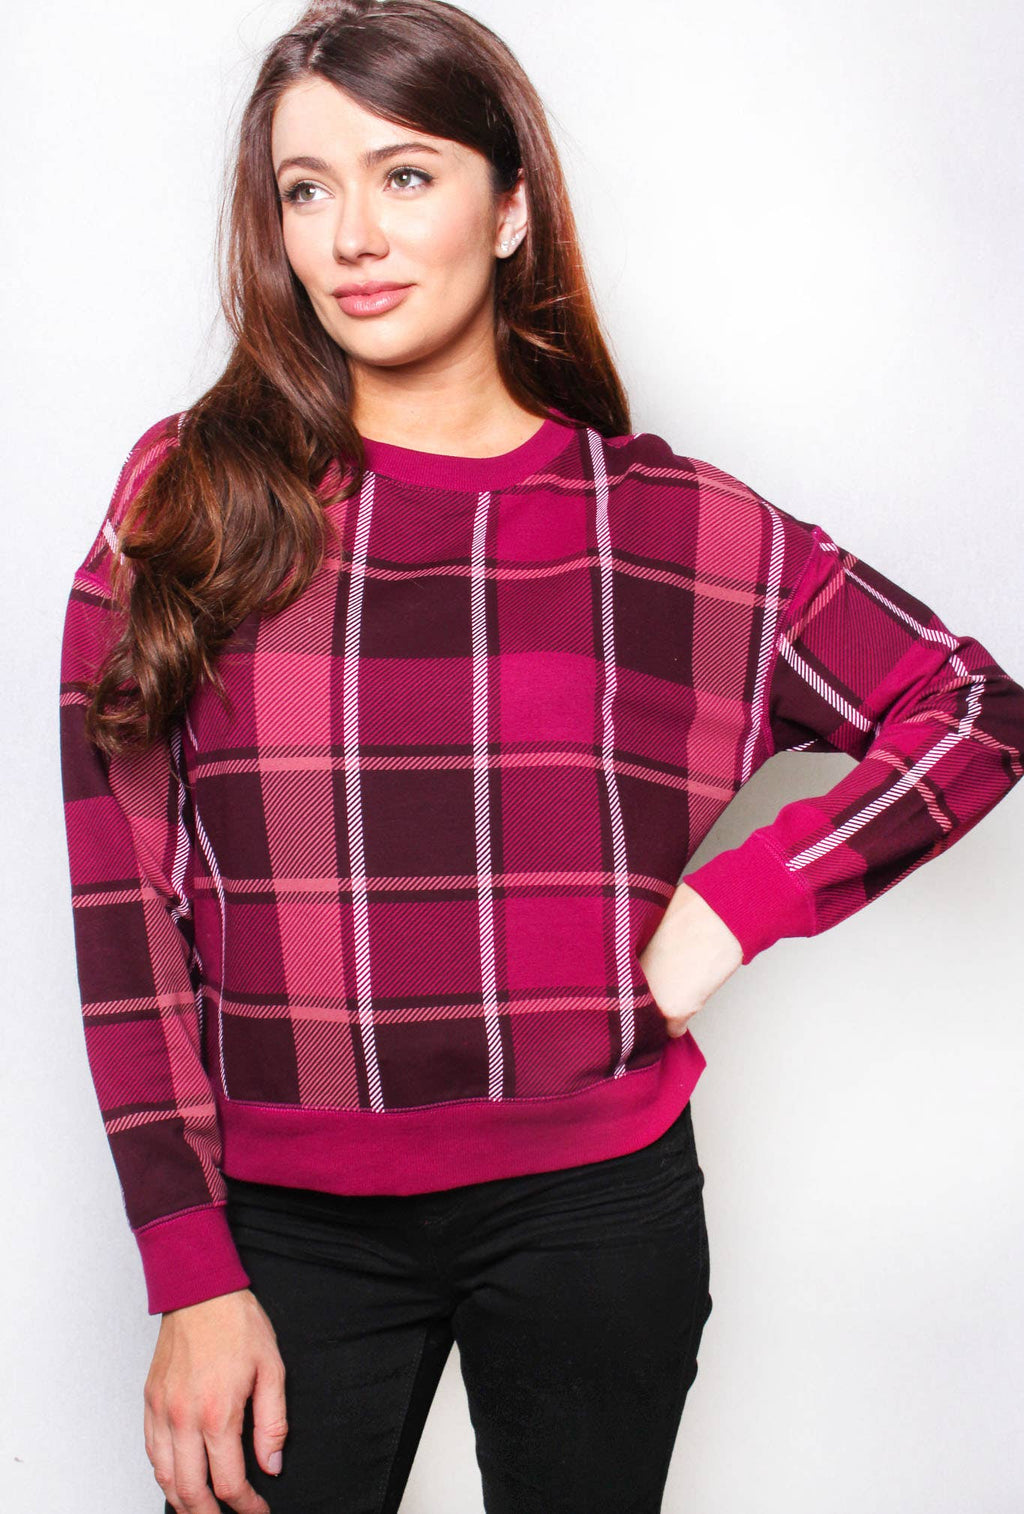 Good Stuff Apparel - Women's Round Neck Long Sleeve Checkered Sweater